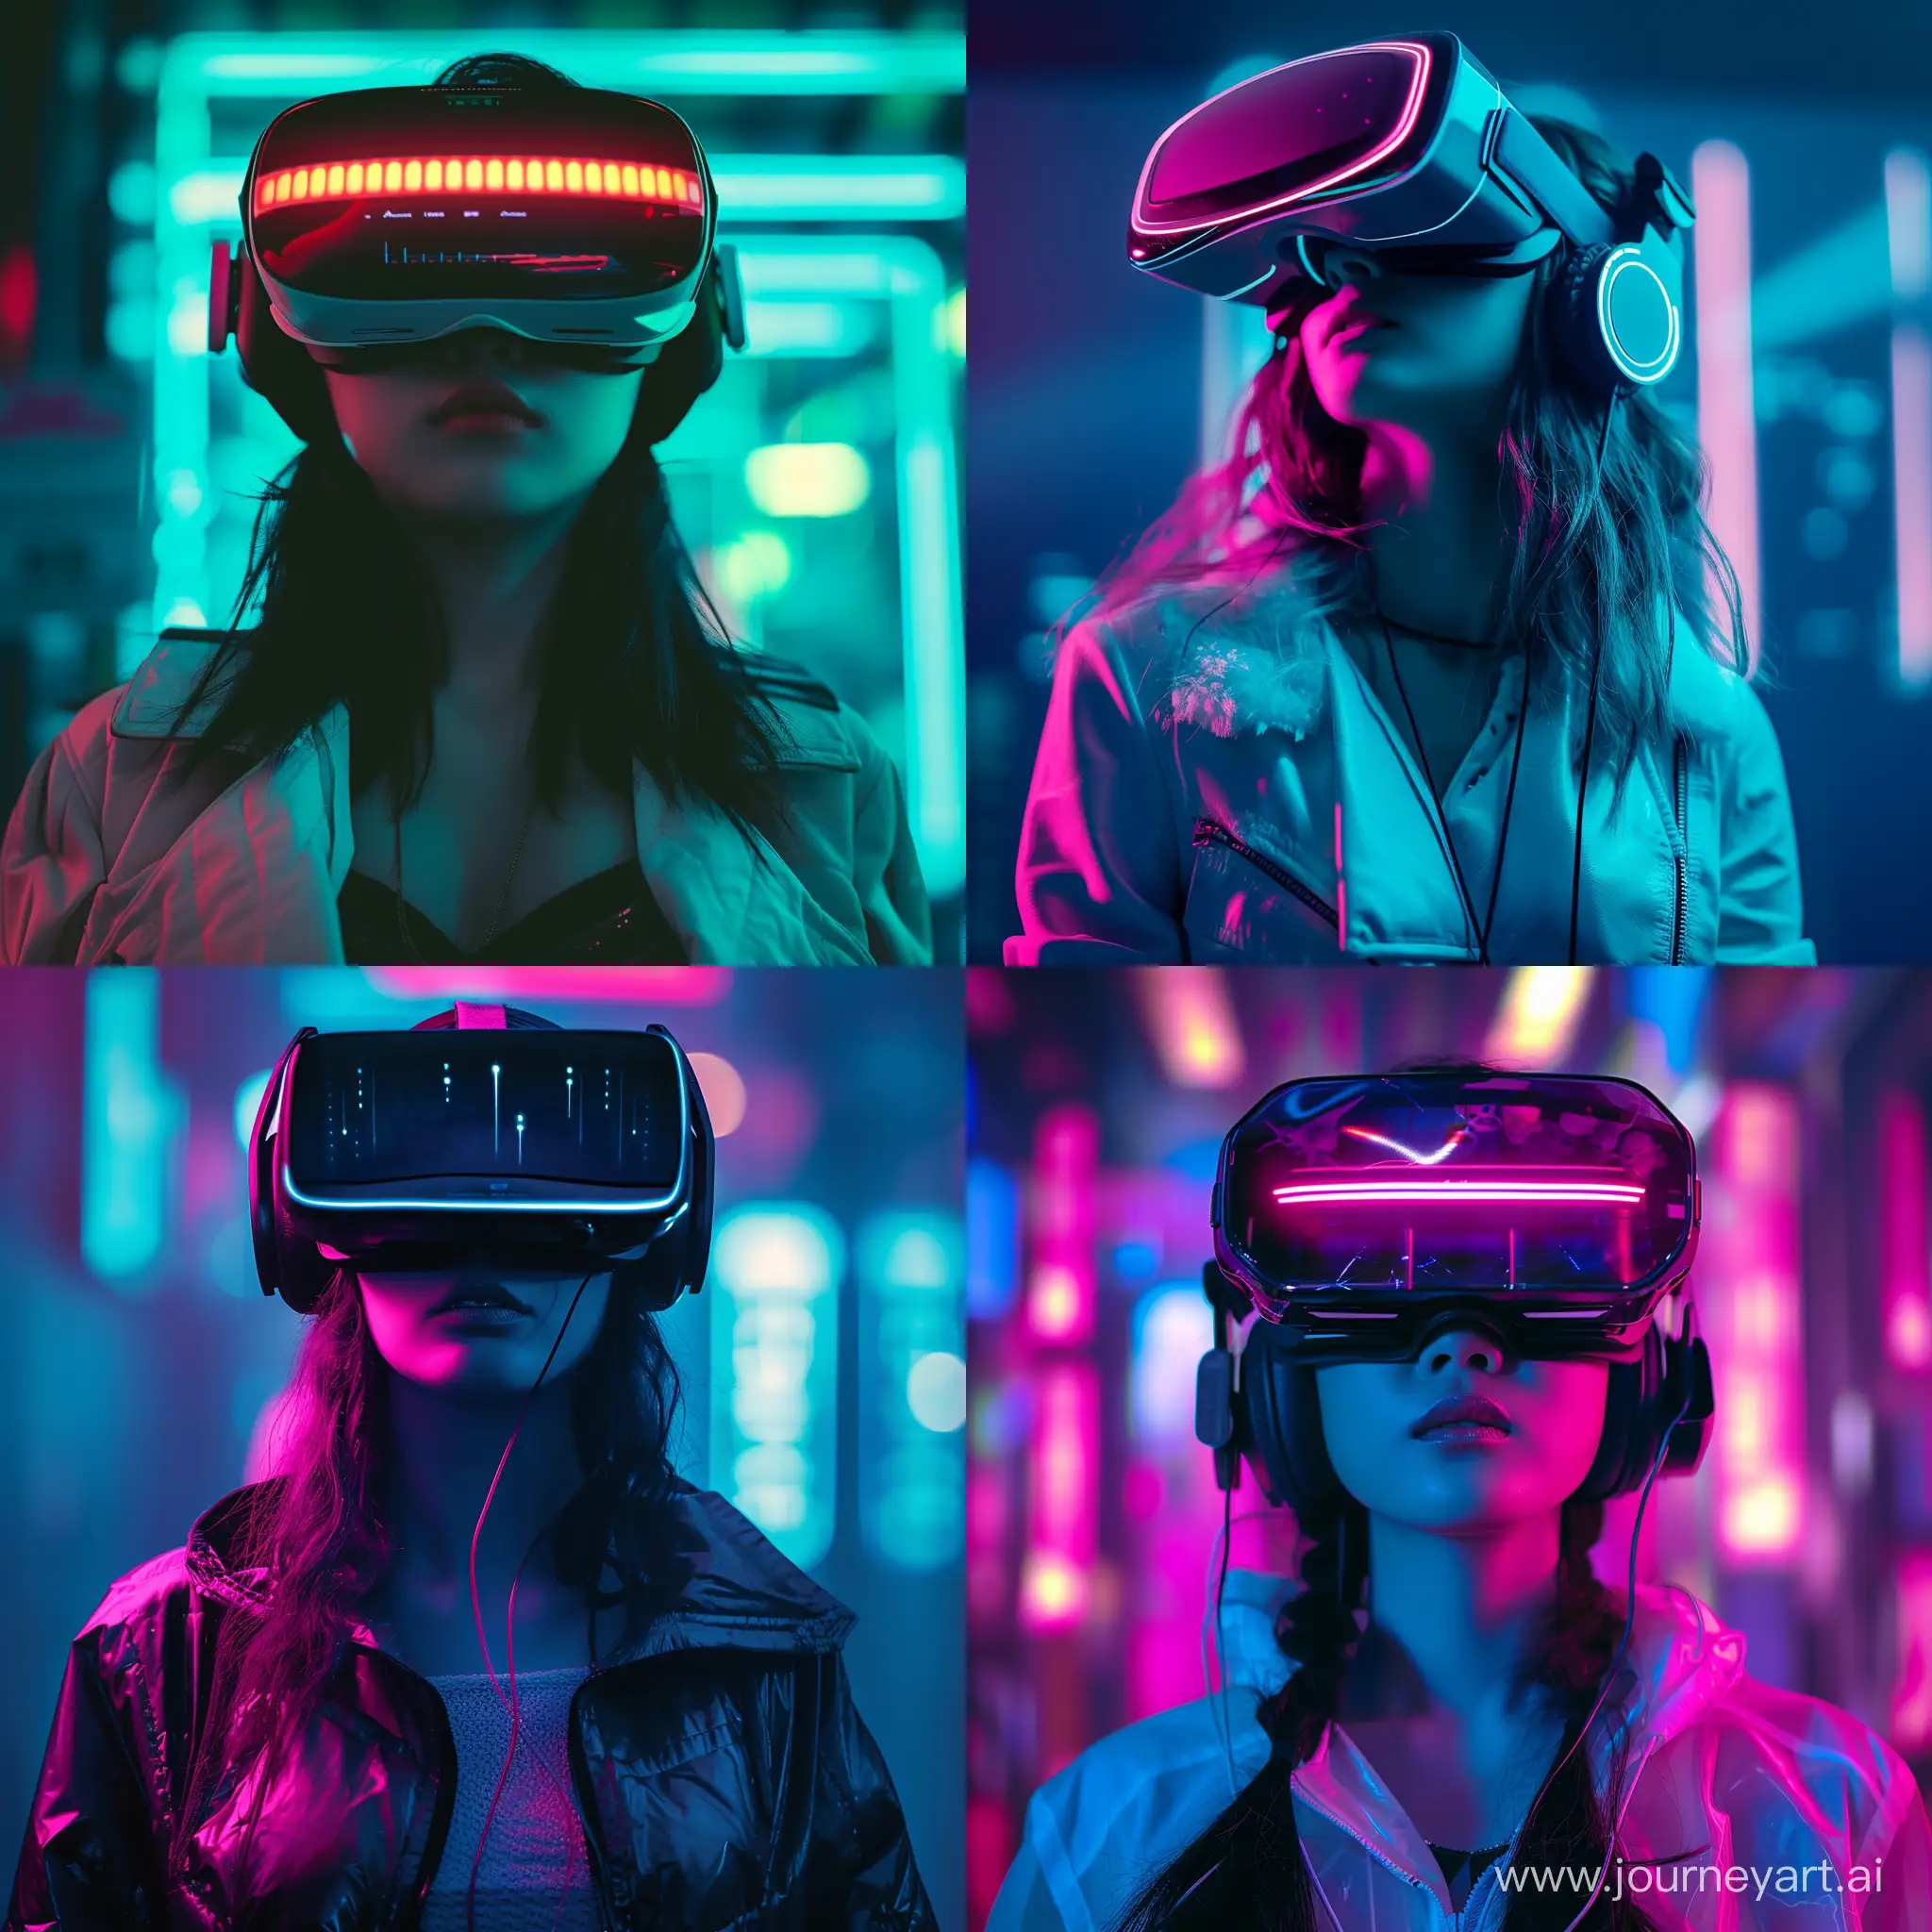 Futuristic-Cyberpunk-Girl-in-Virtual-Reality-Experience